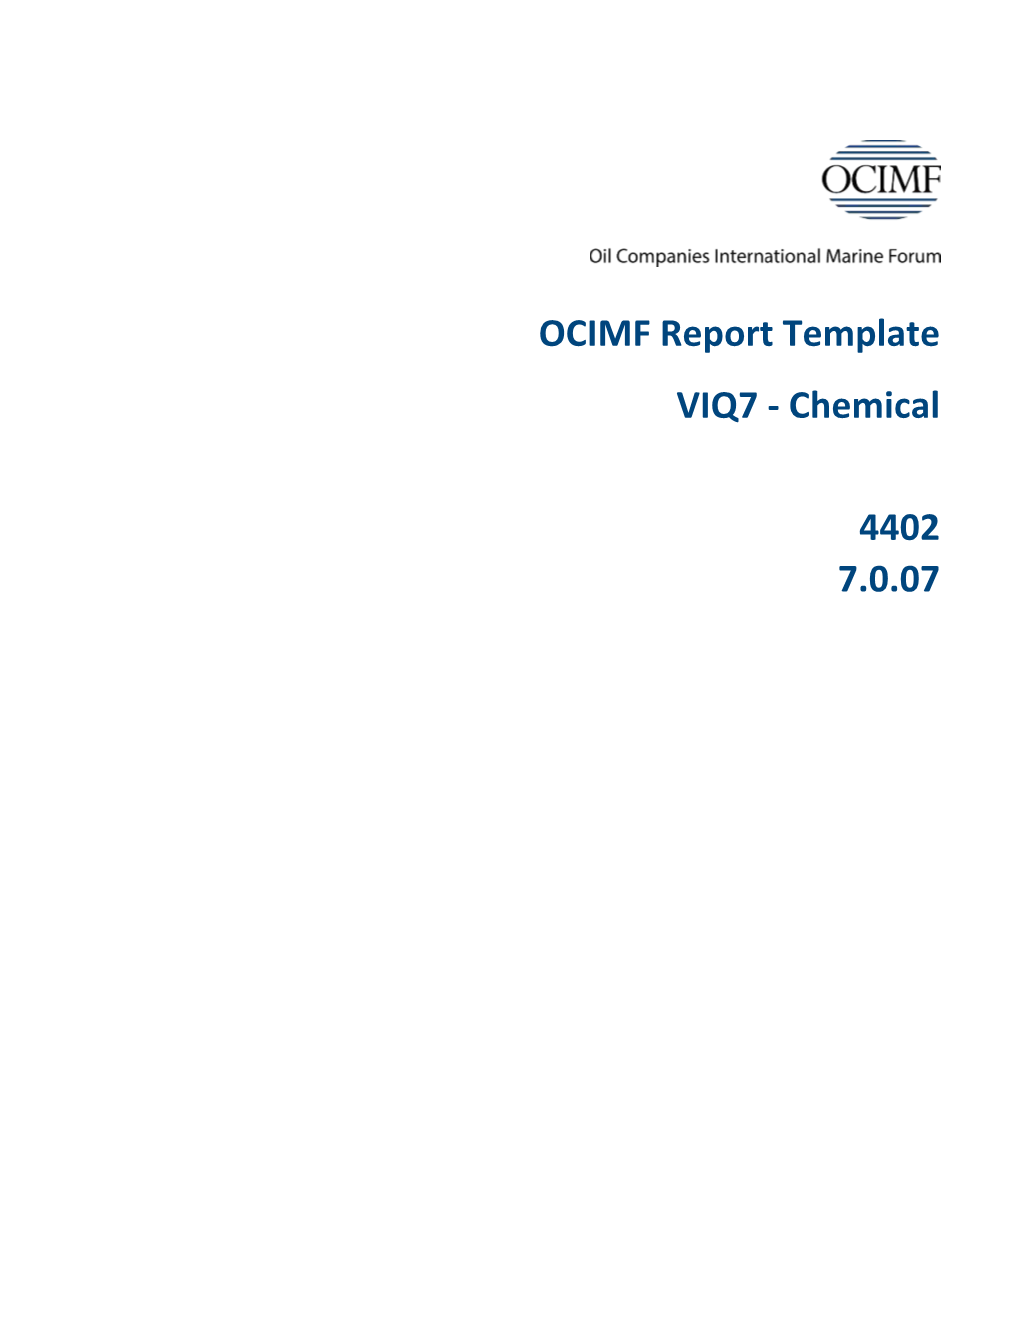 OCIMF Report Template VIQ7 - Chemical